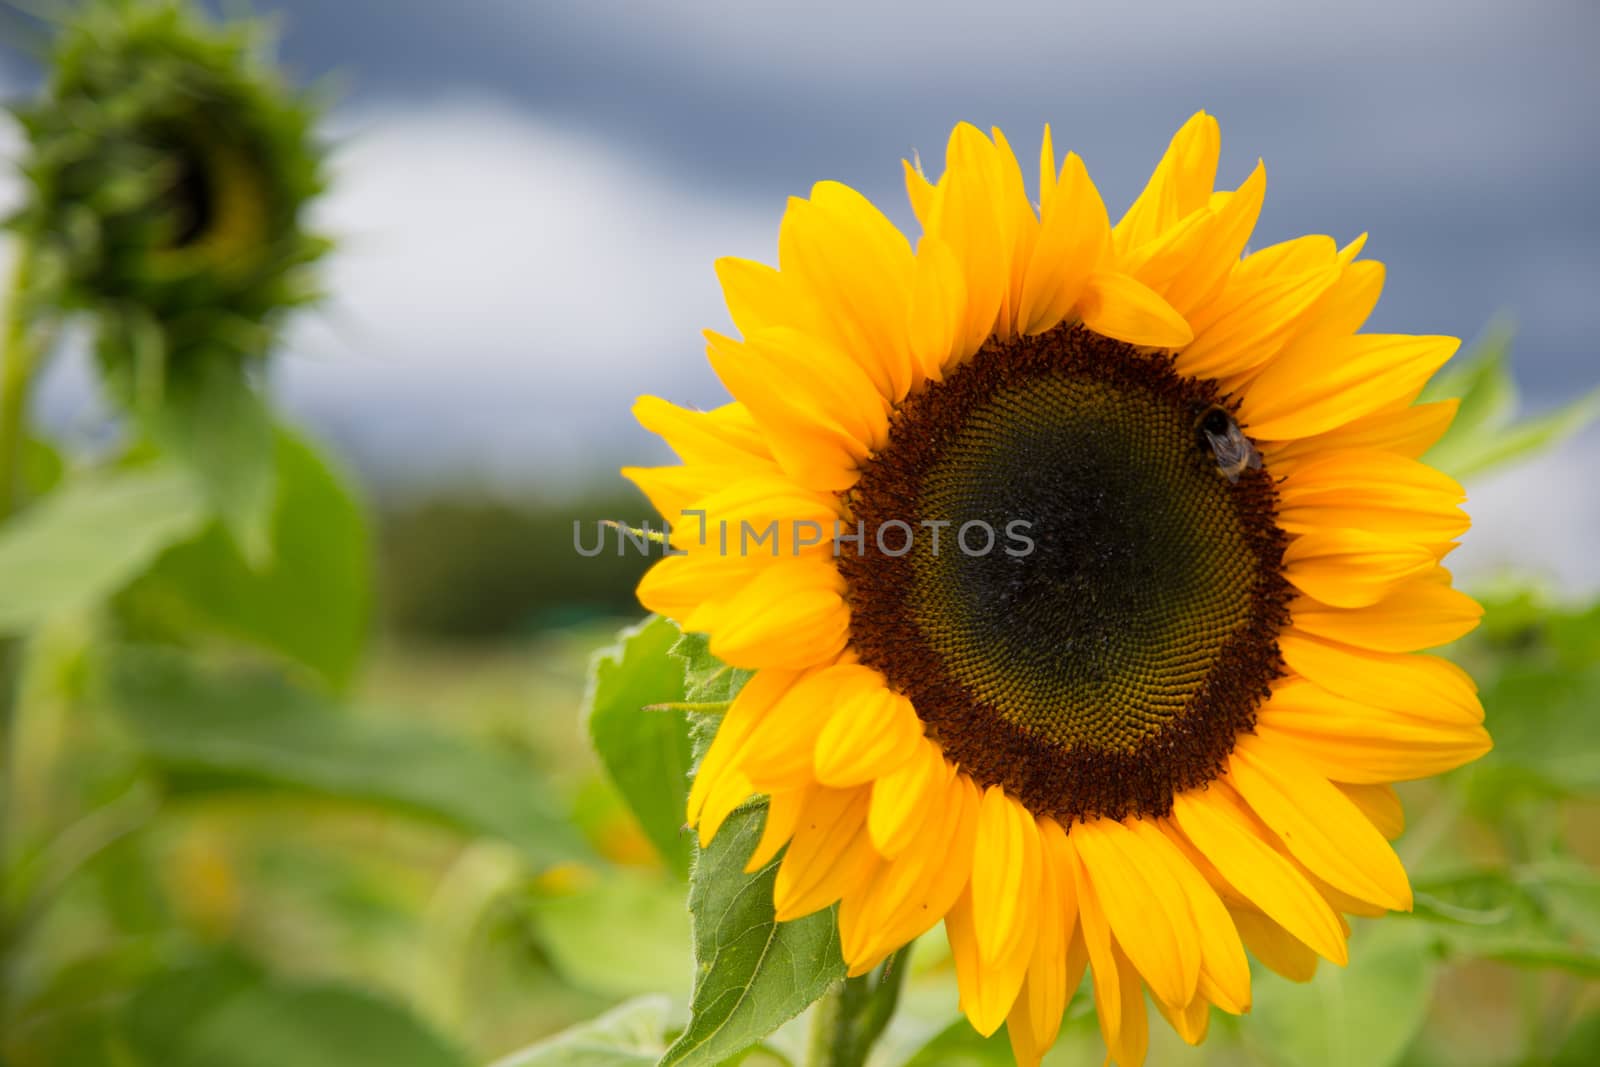 beatuful sunflowers on the field by 25ehaag6